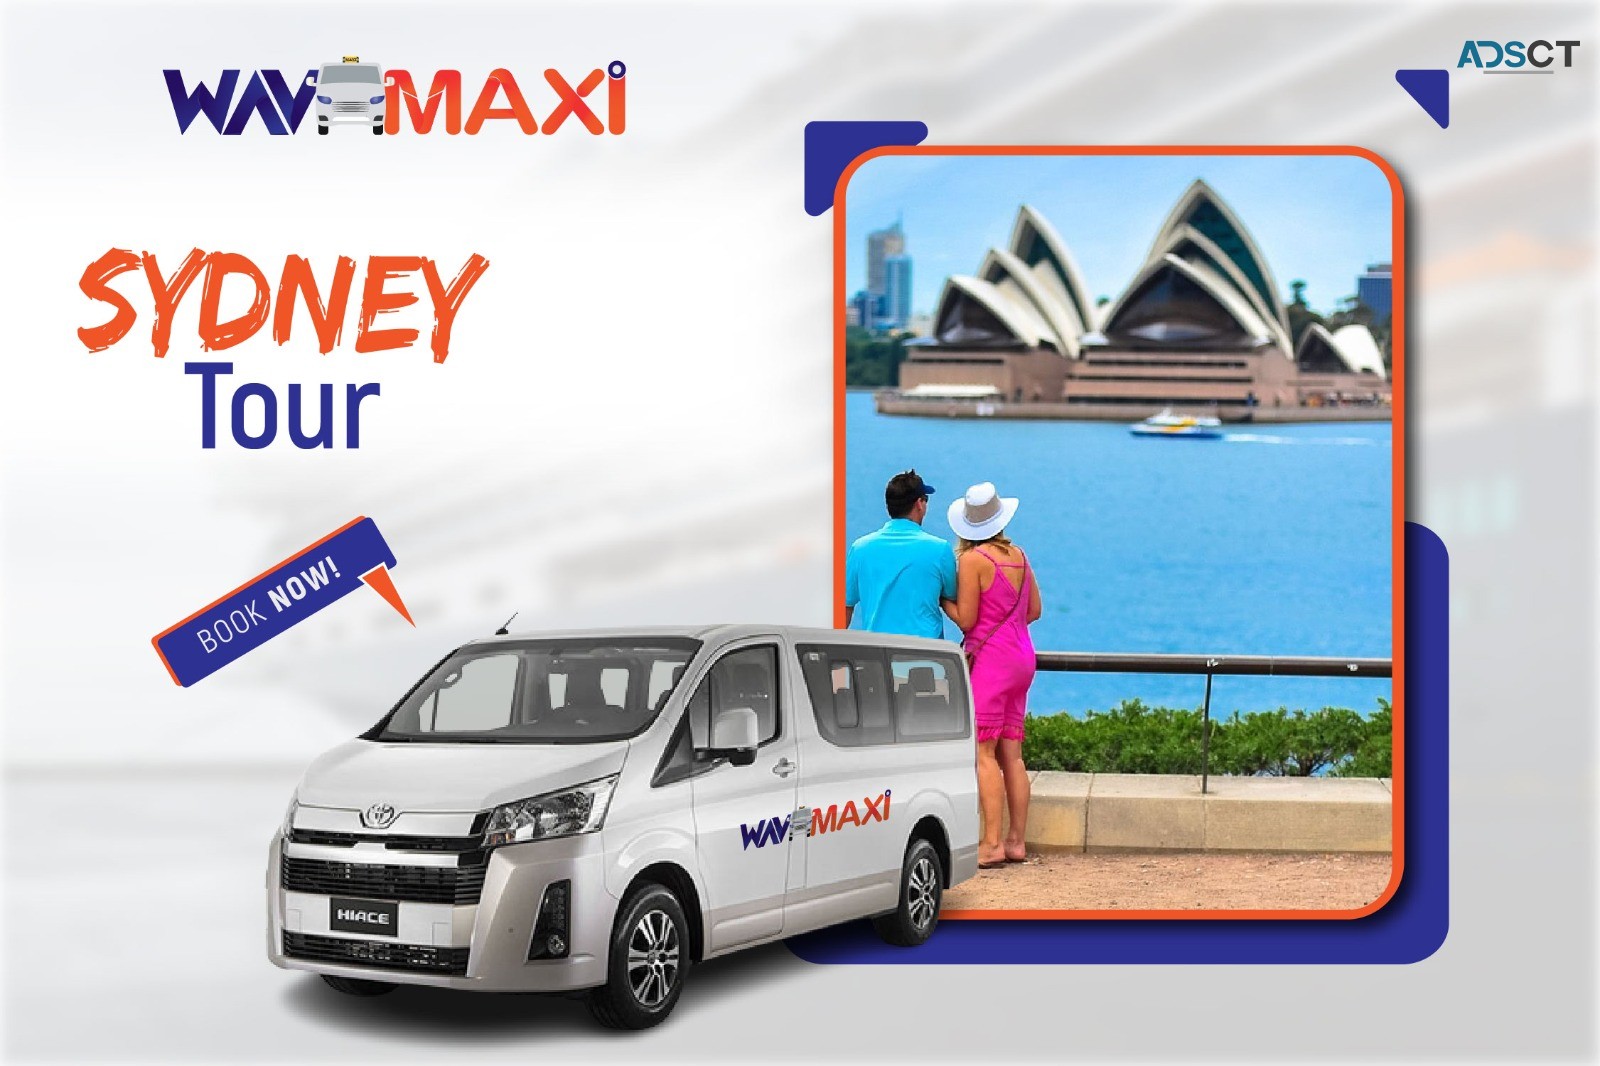 Maxi Taxi Sydney | Your Spacious Ride Awaits with Wav Maxi Cabs